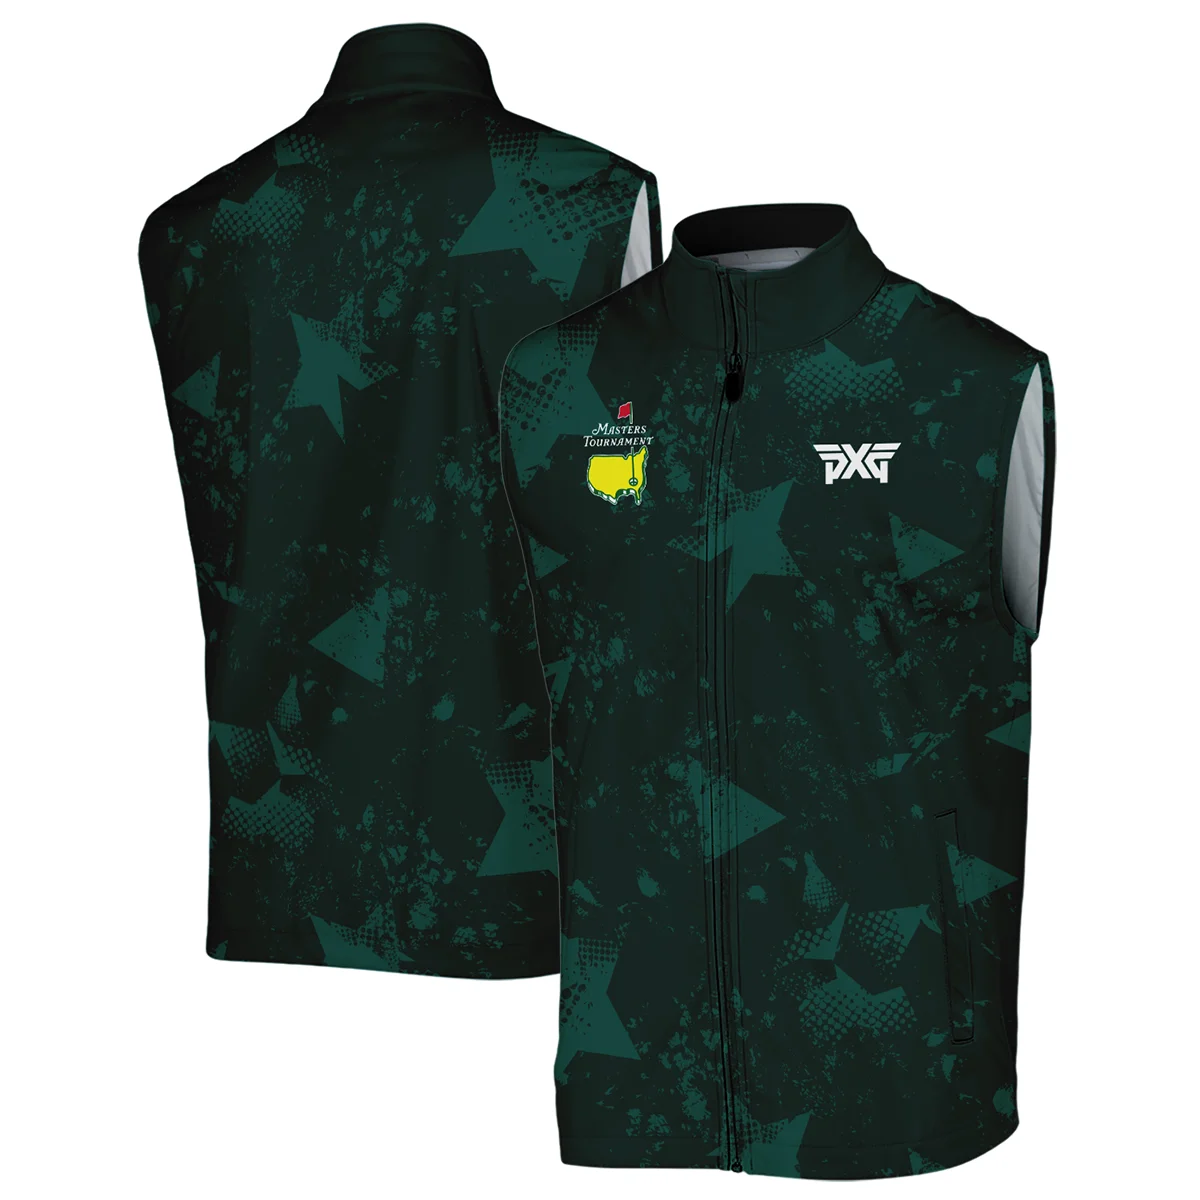 Dark Green Grunge Stars Pattern Golf Masters Tournament Zipper Polo Shirt Style Classic Zipper Polo Shirt For Men